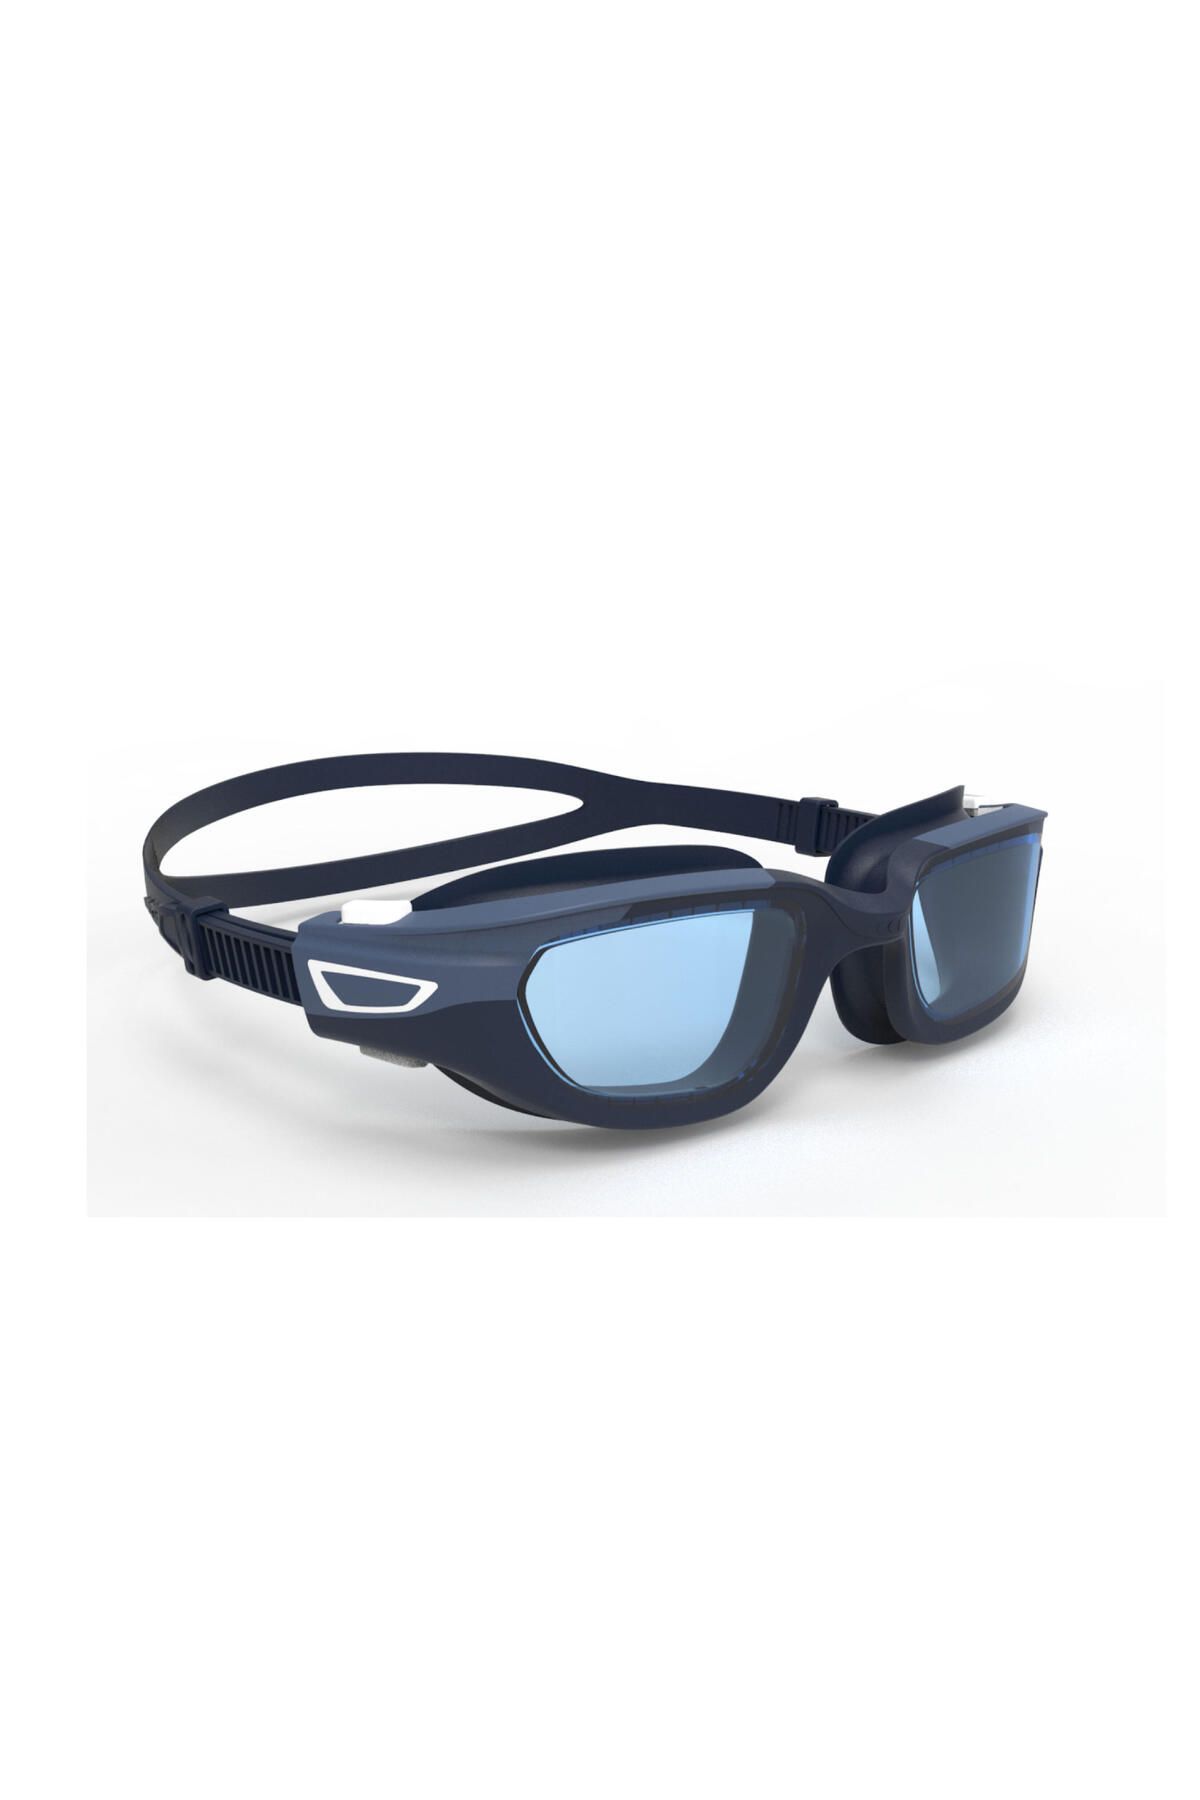 Decathlon Yüzücü Gözlüğü - Mavi / Beyaz - Renkli Camlar - L Boy - Spirit